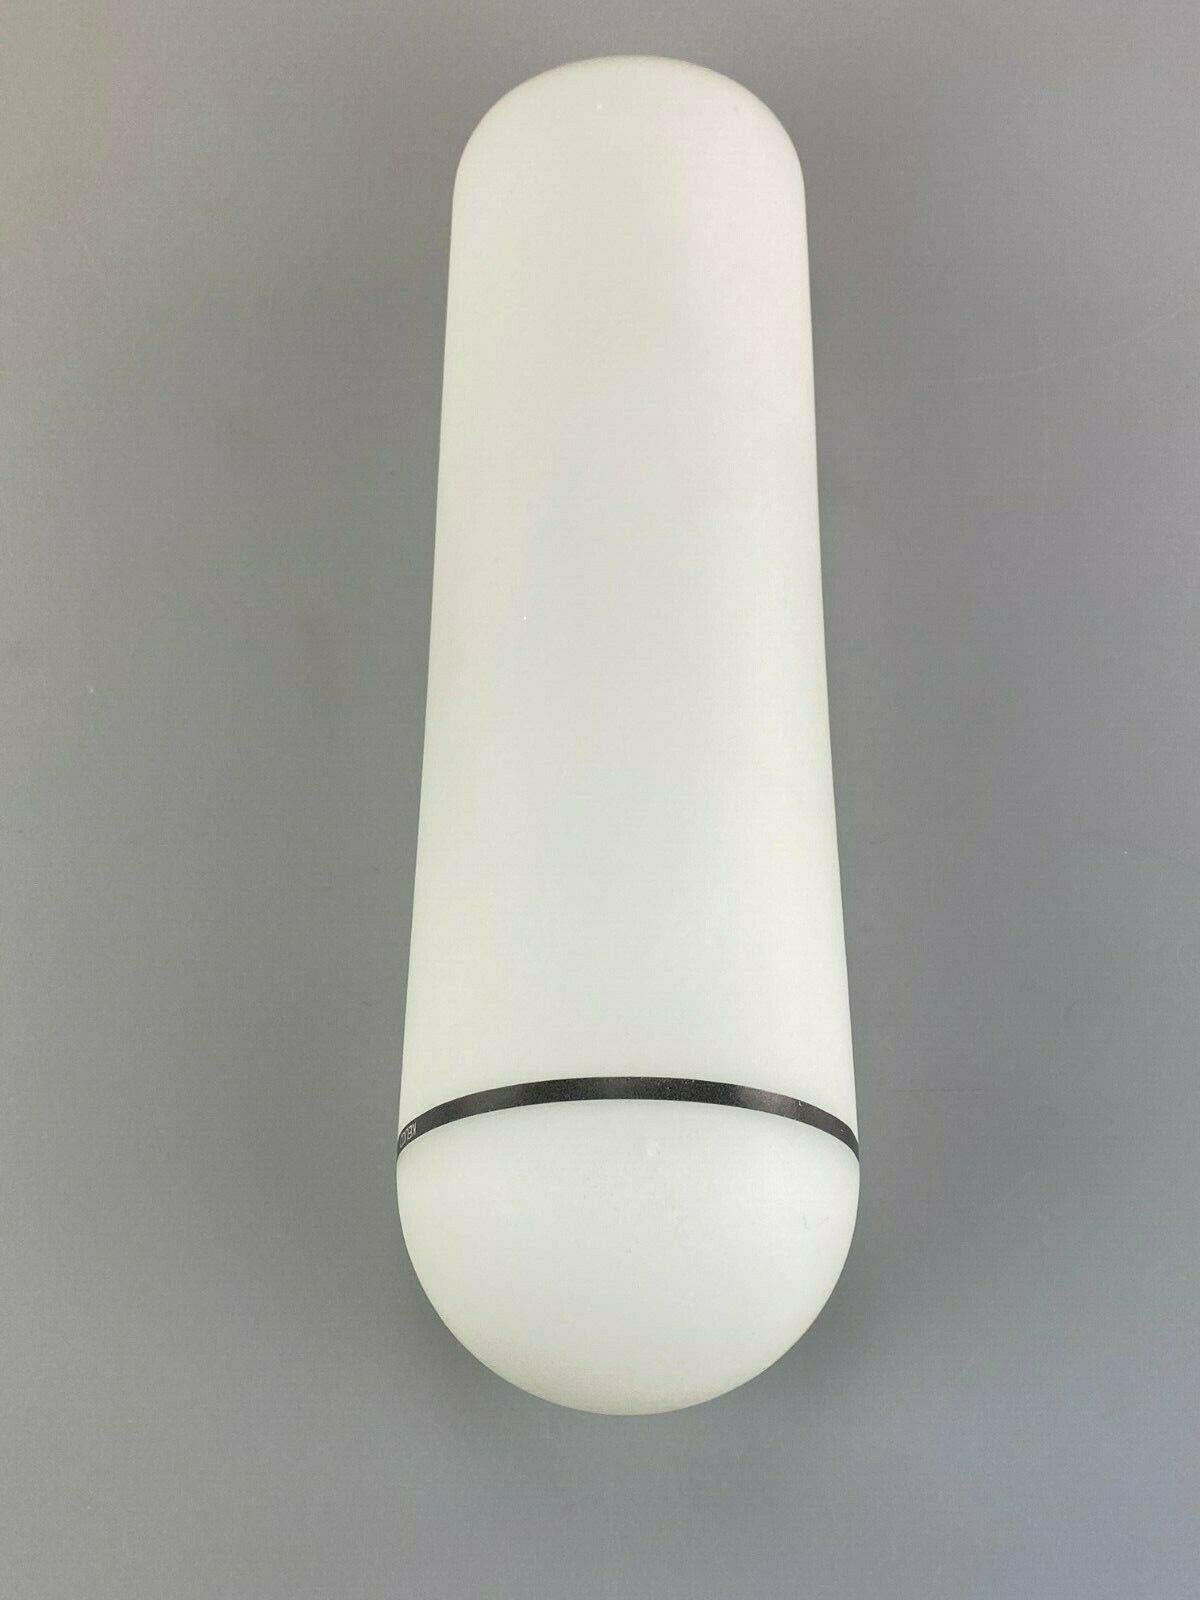 80er Jahre Lampe Licht Wandlampe Wandleuchte Opalglas Weiß Metall Design 2